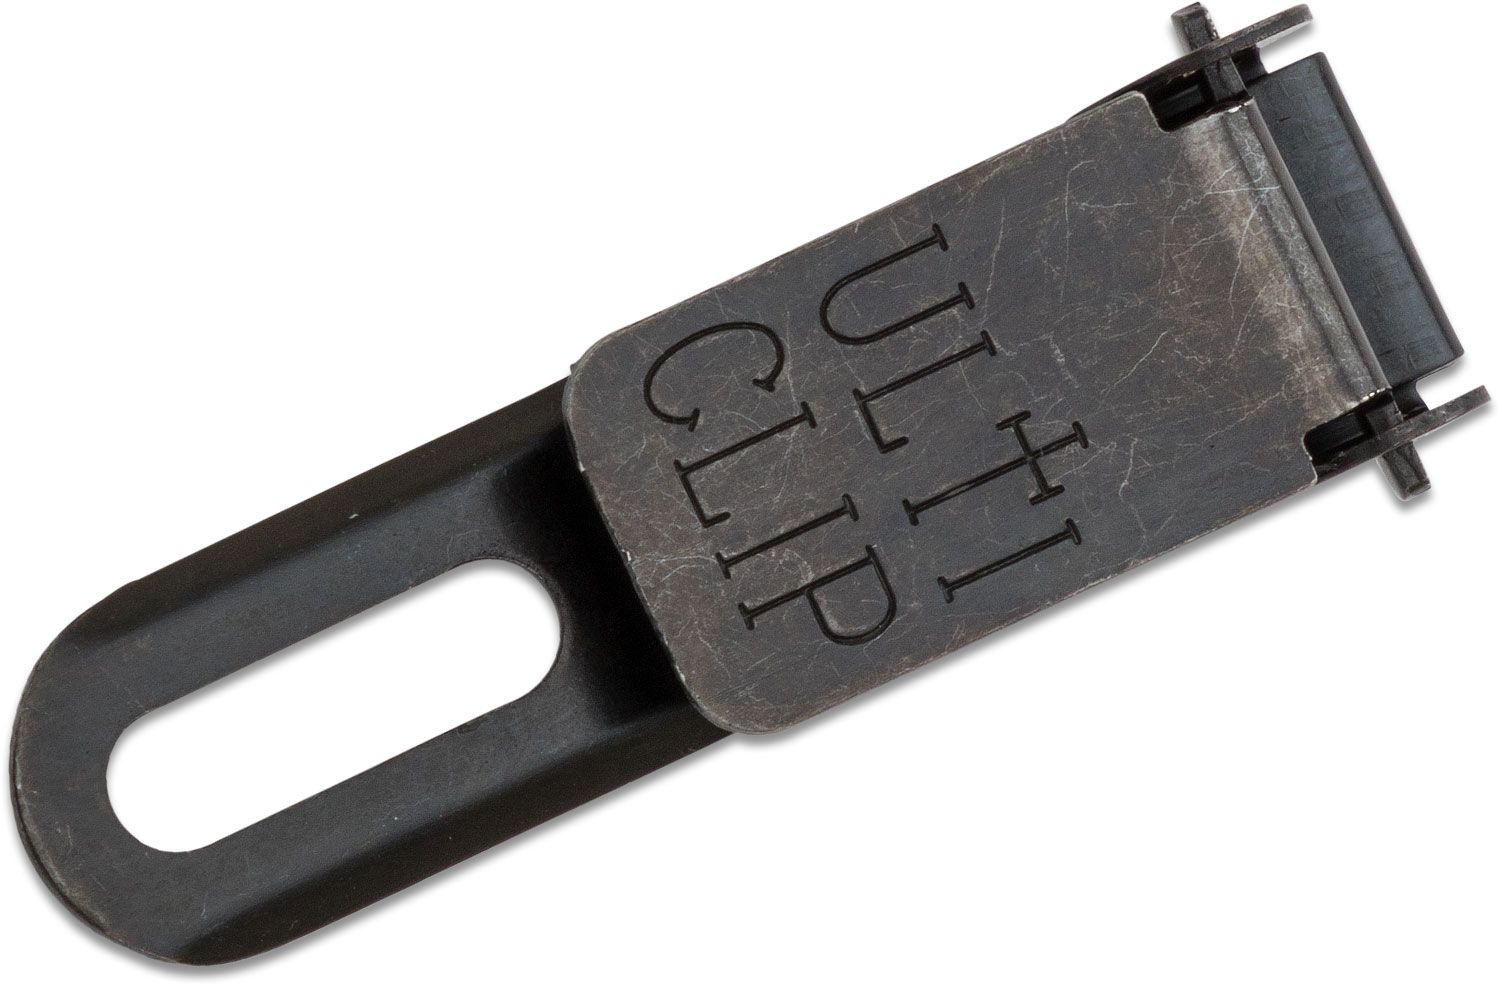 ULTICLIP Slim 2.2 Fixed Blade Clip for Belt-Less Carry - KnifeCenter -  245-DSLIM22